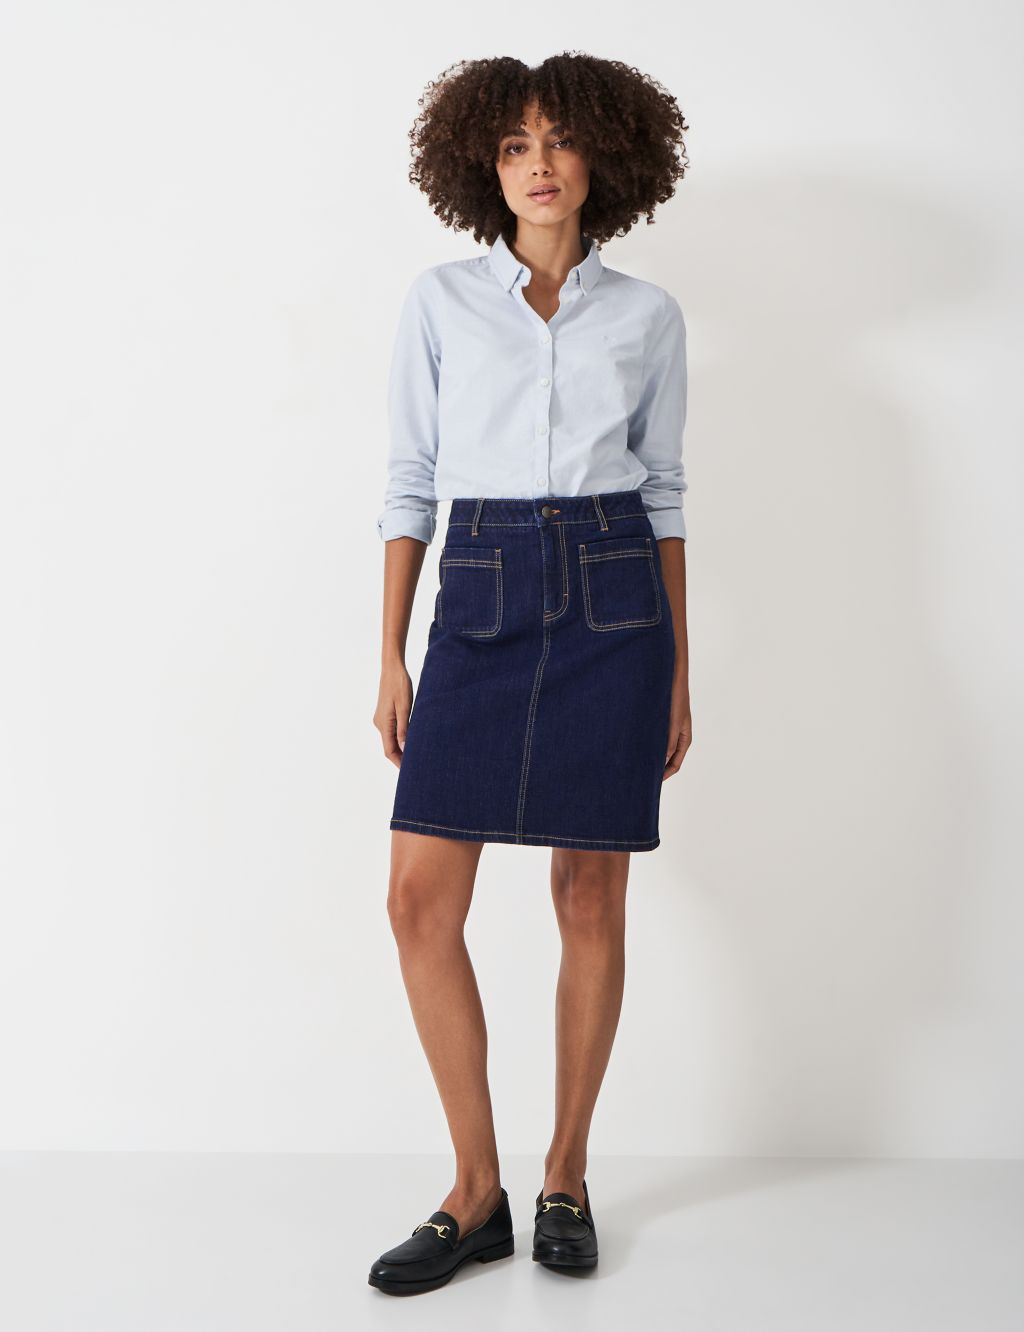 Cotton Rich Denim Knee Length A-Line Skirt 3 of 5